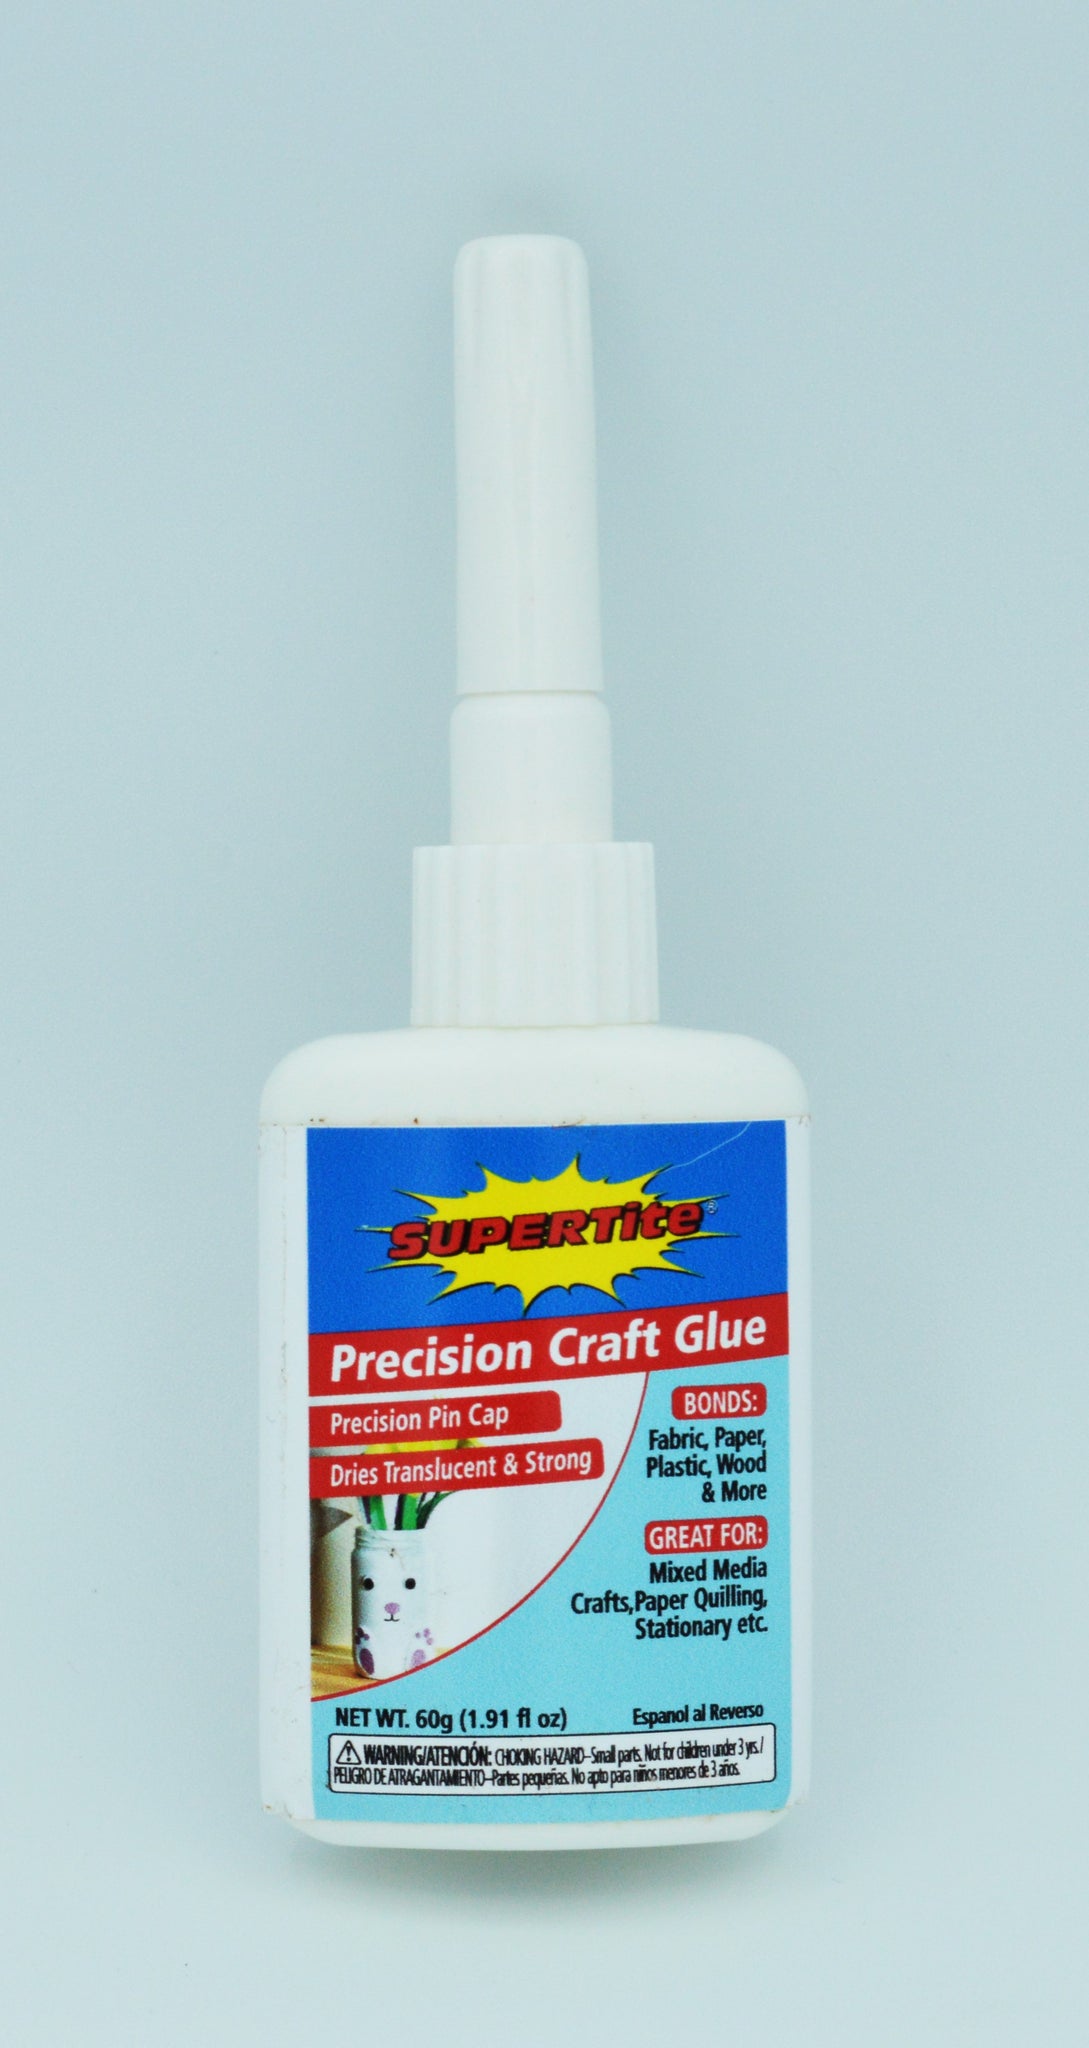 Level up your glue bottles - GLUE PINS!